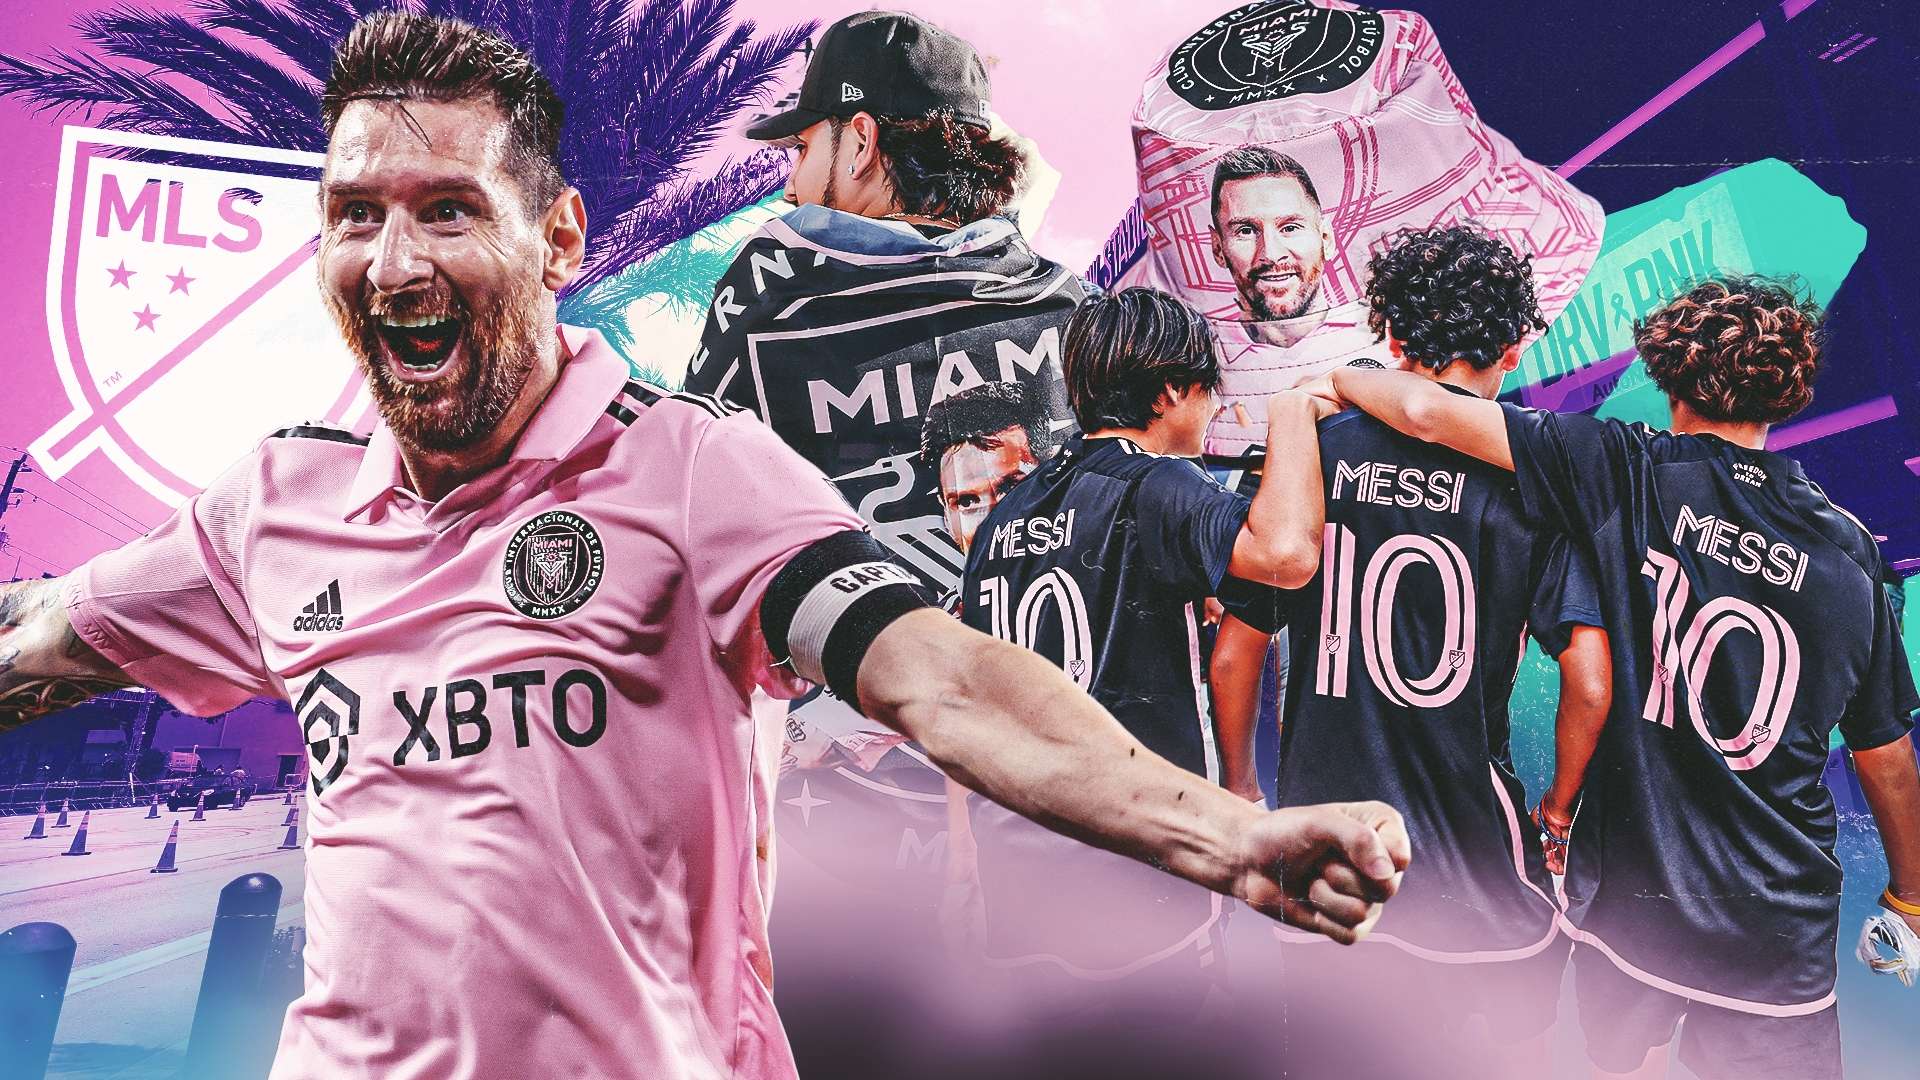 MLS Messi-mania GFX